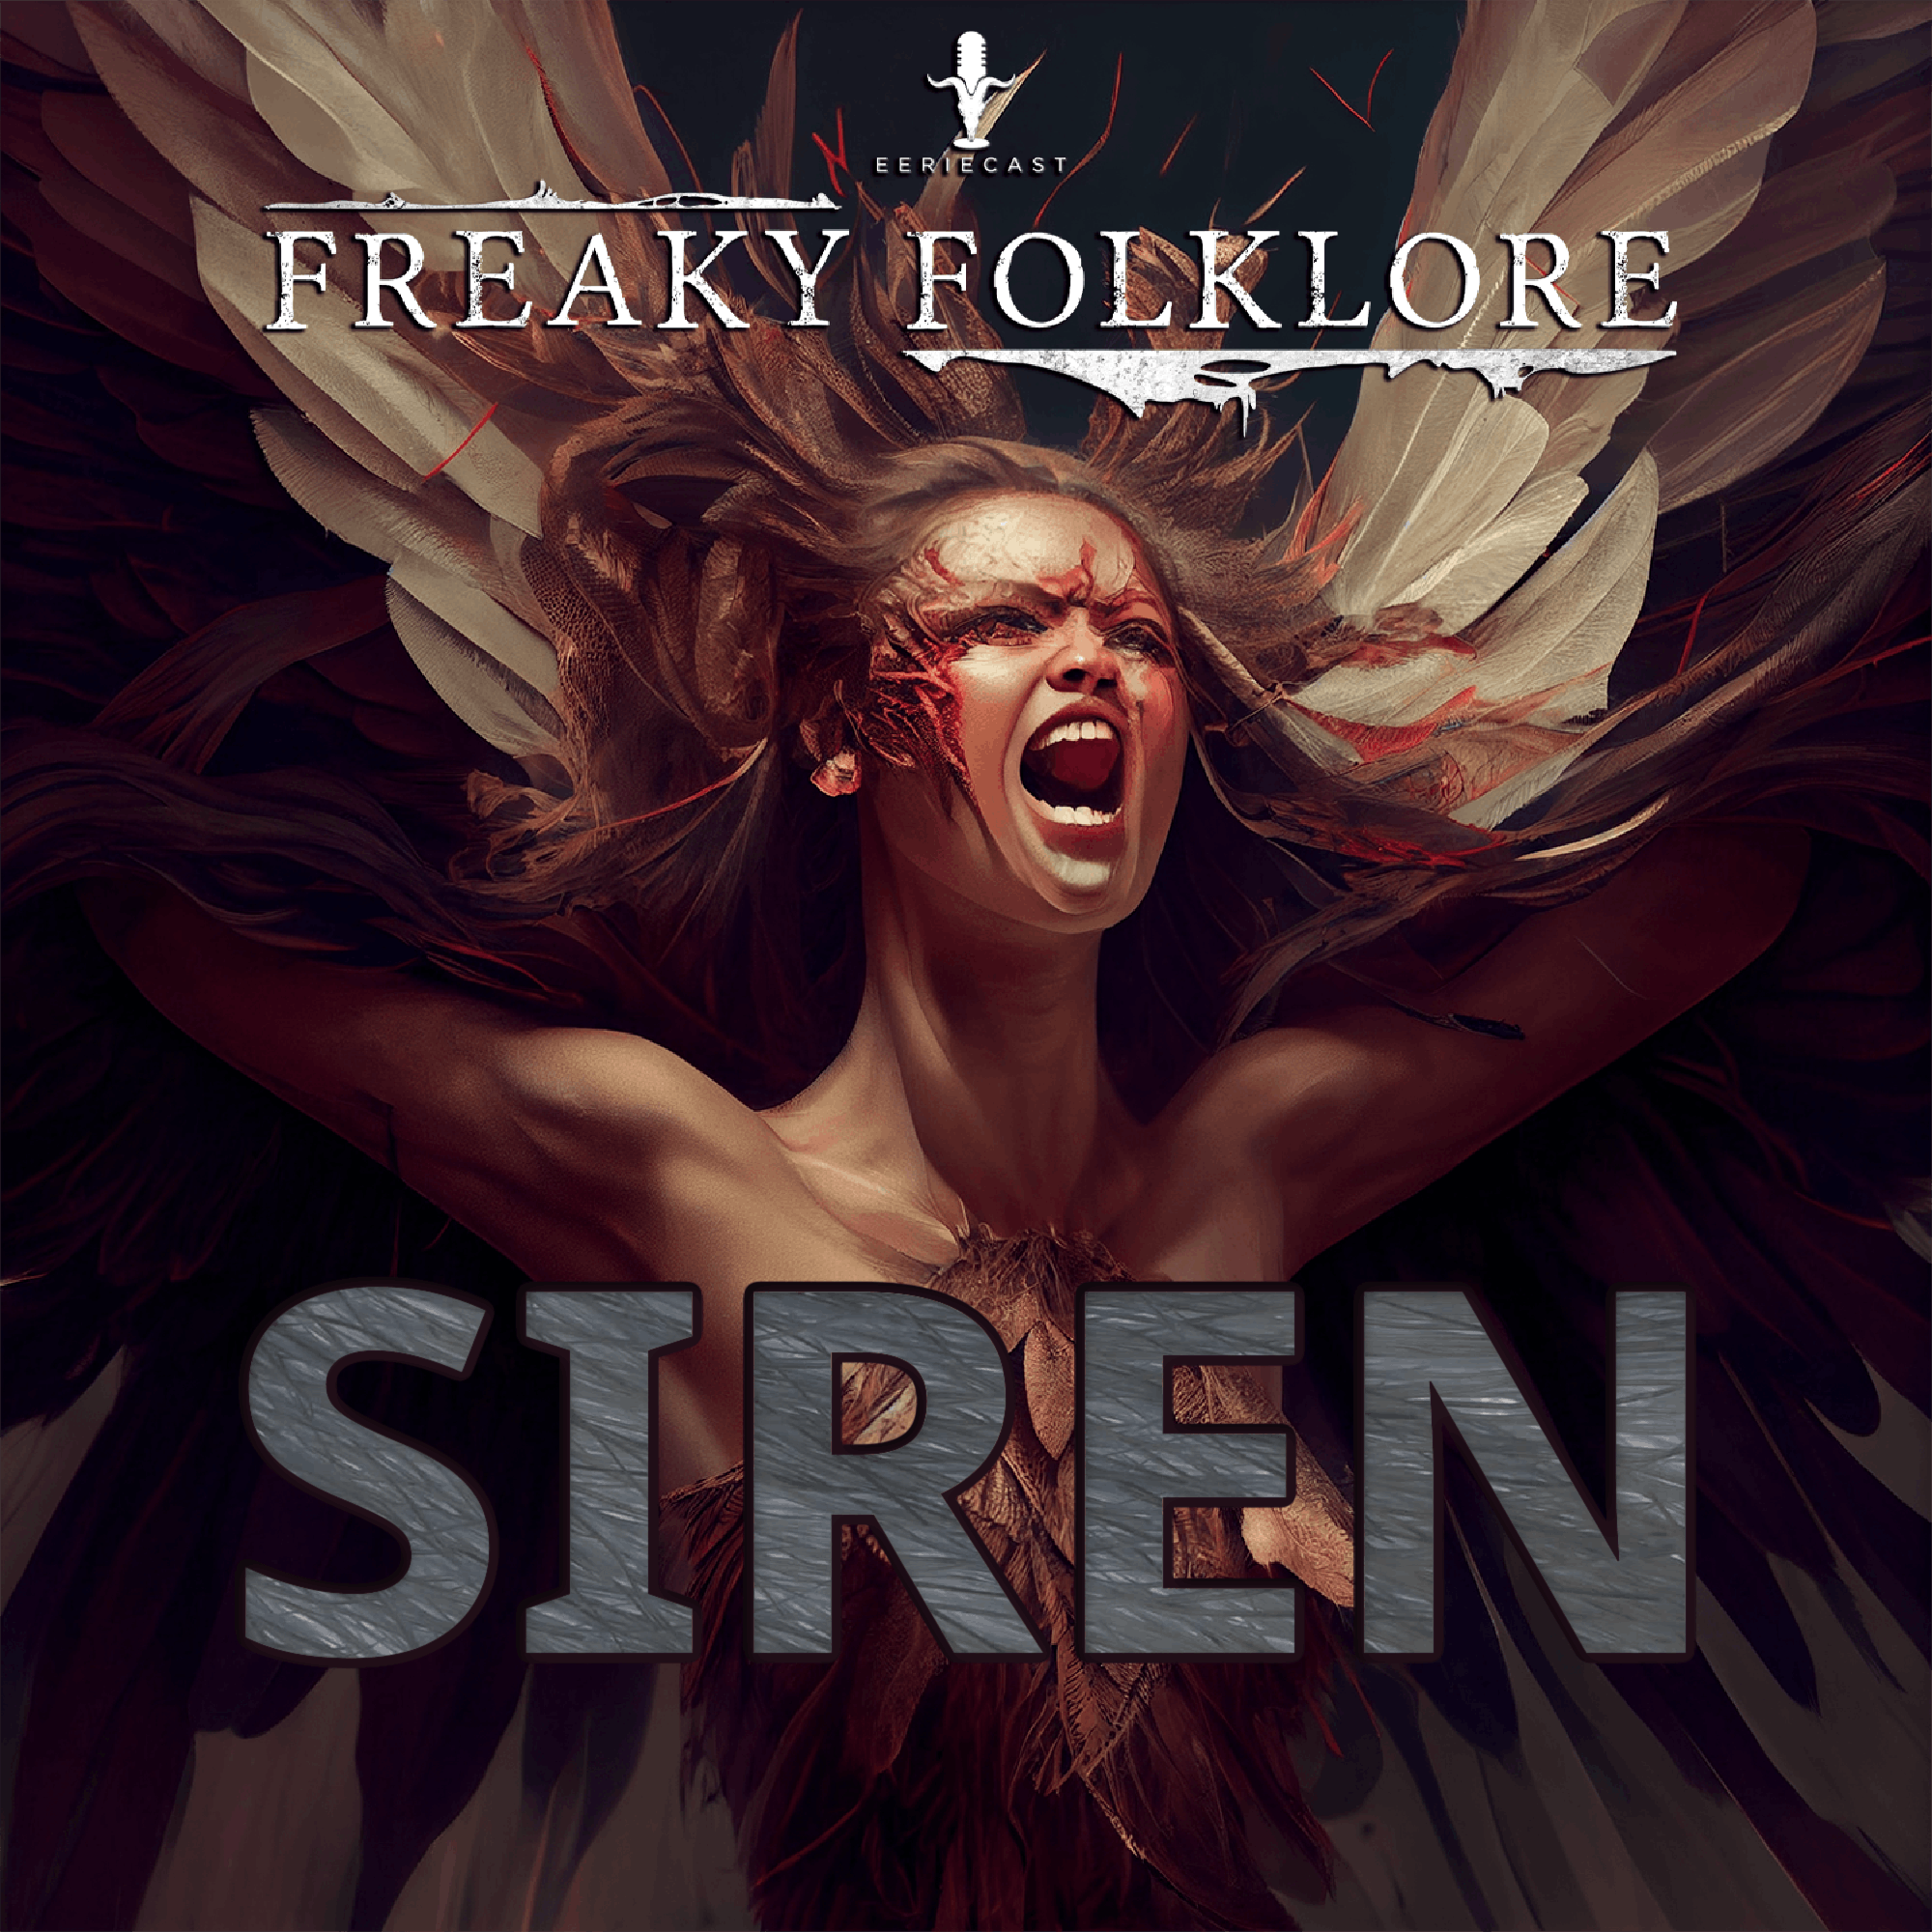 Siren - The Killer Bird Woman of Greek Mythology